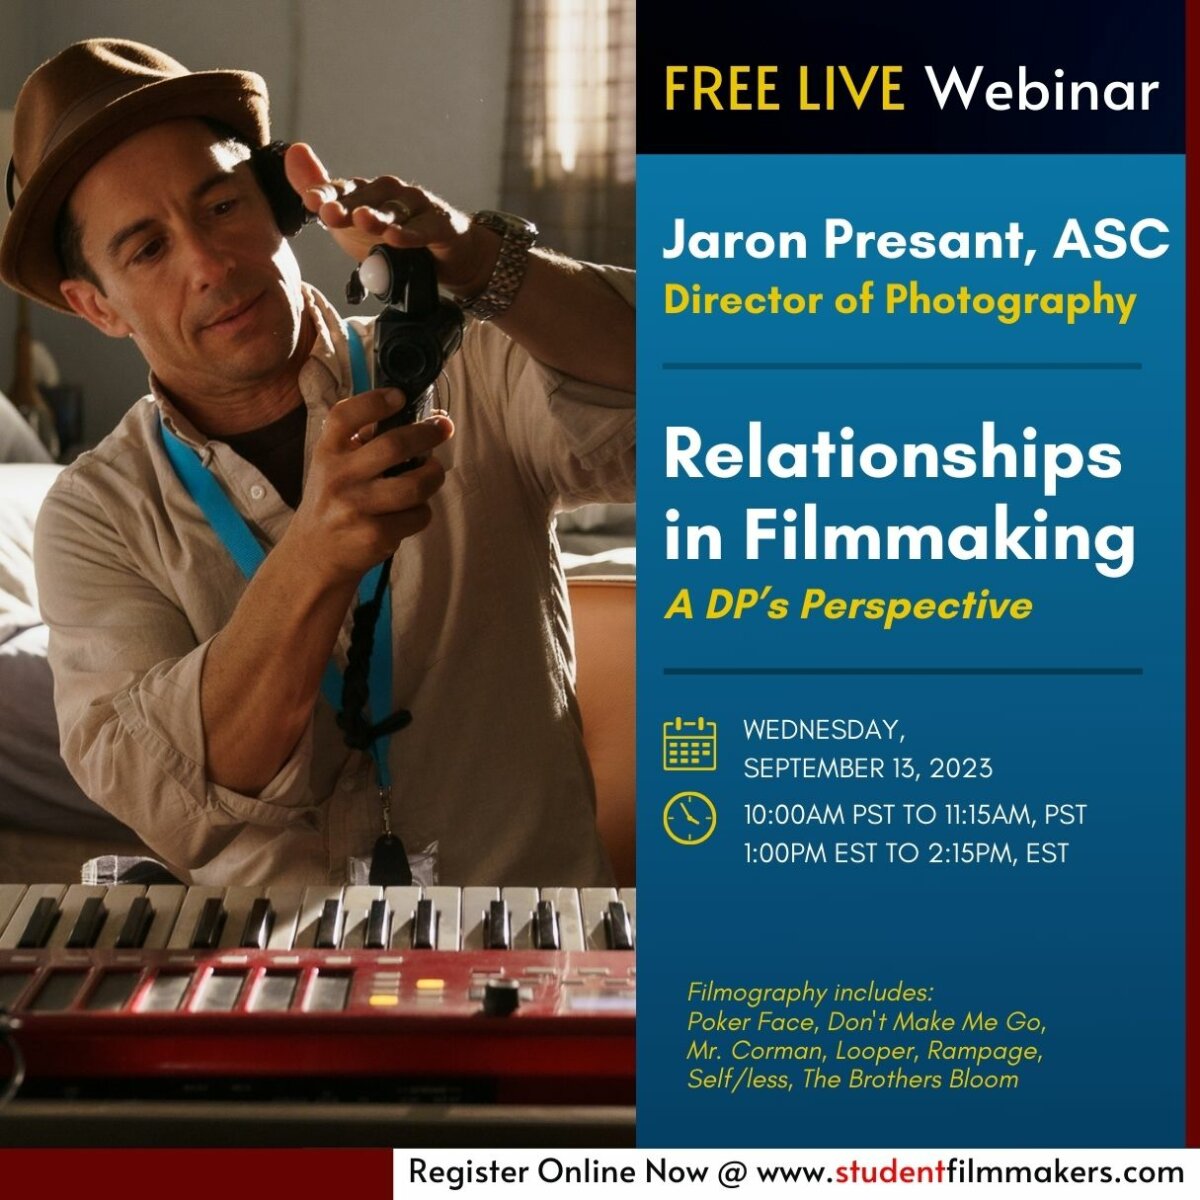 Free Live Filmmaking Webinar: Jaron Presant, ASC, Director of Photography. "Relationships in Filmmaking," a DP's Perspective.